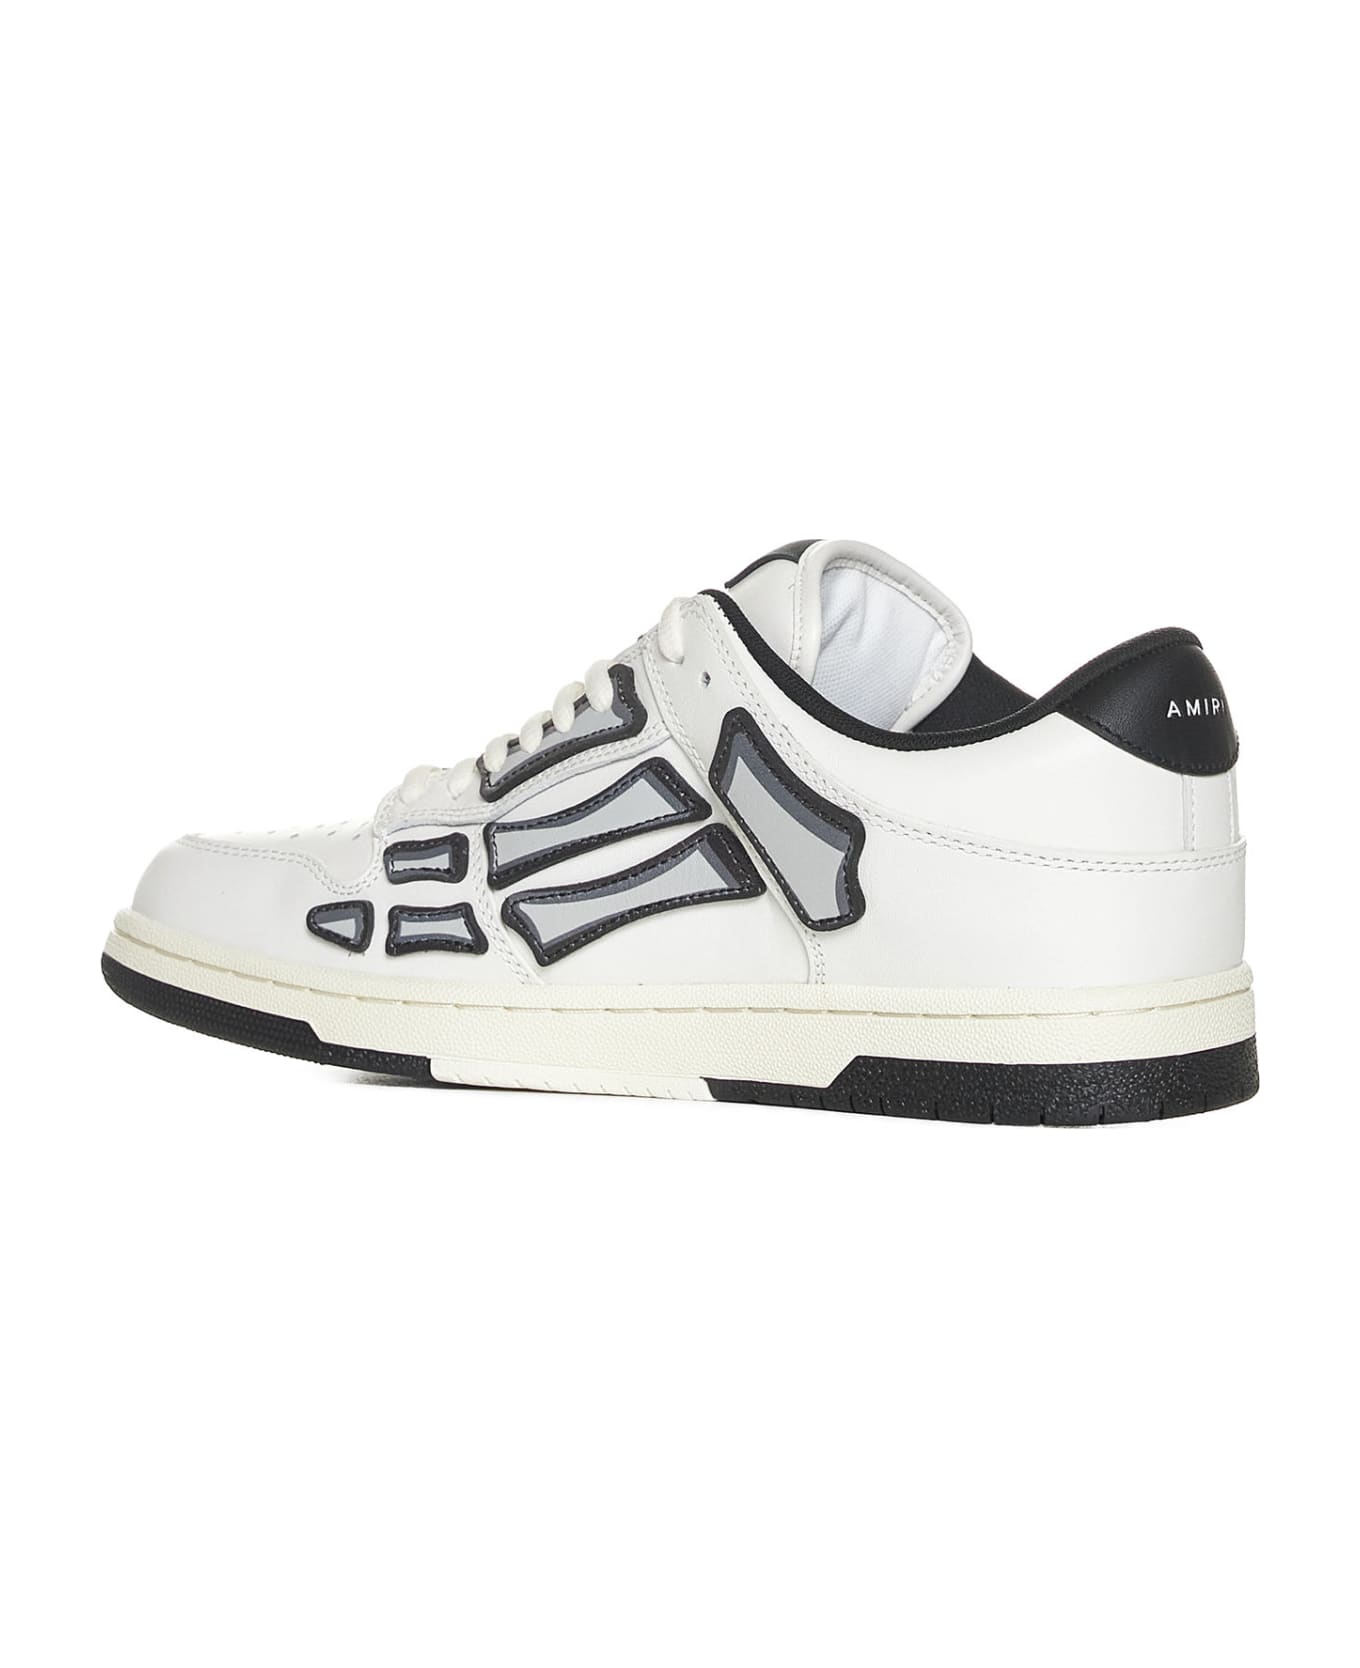 AMIRI Sneakers - White/black